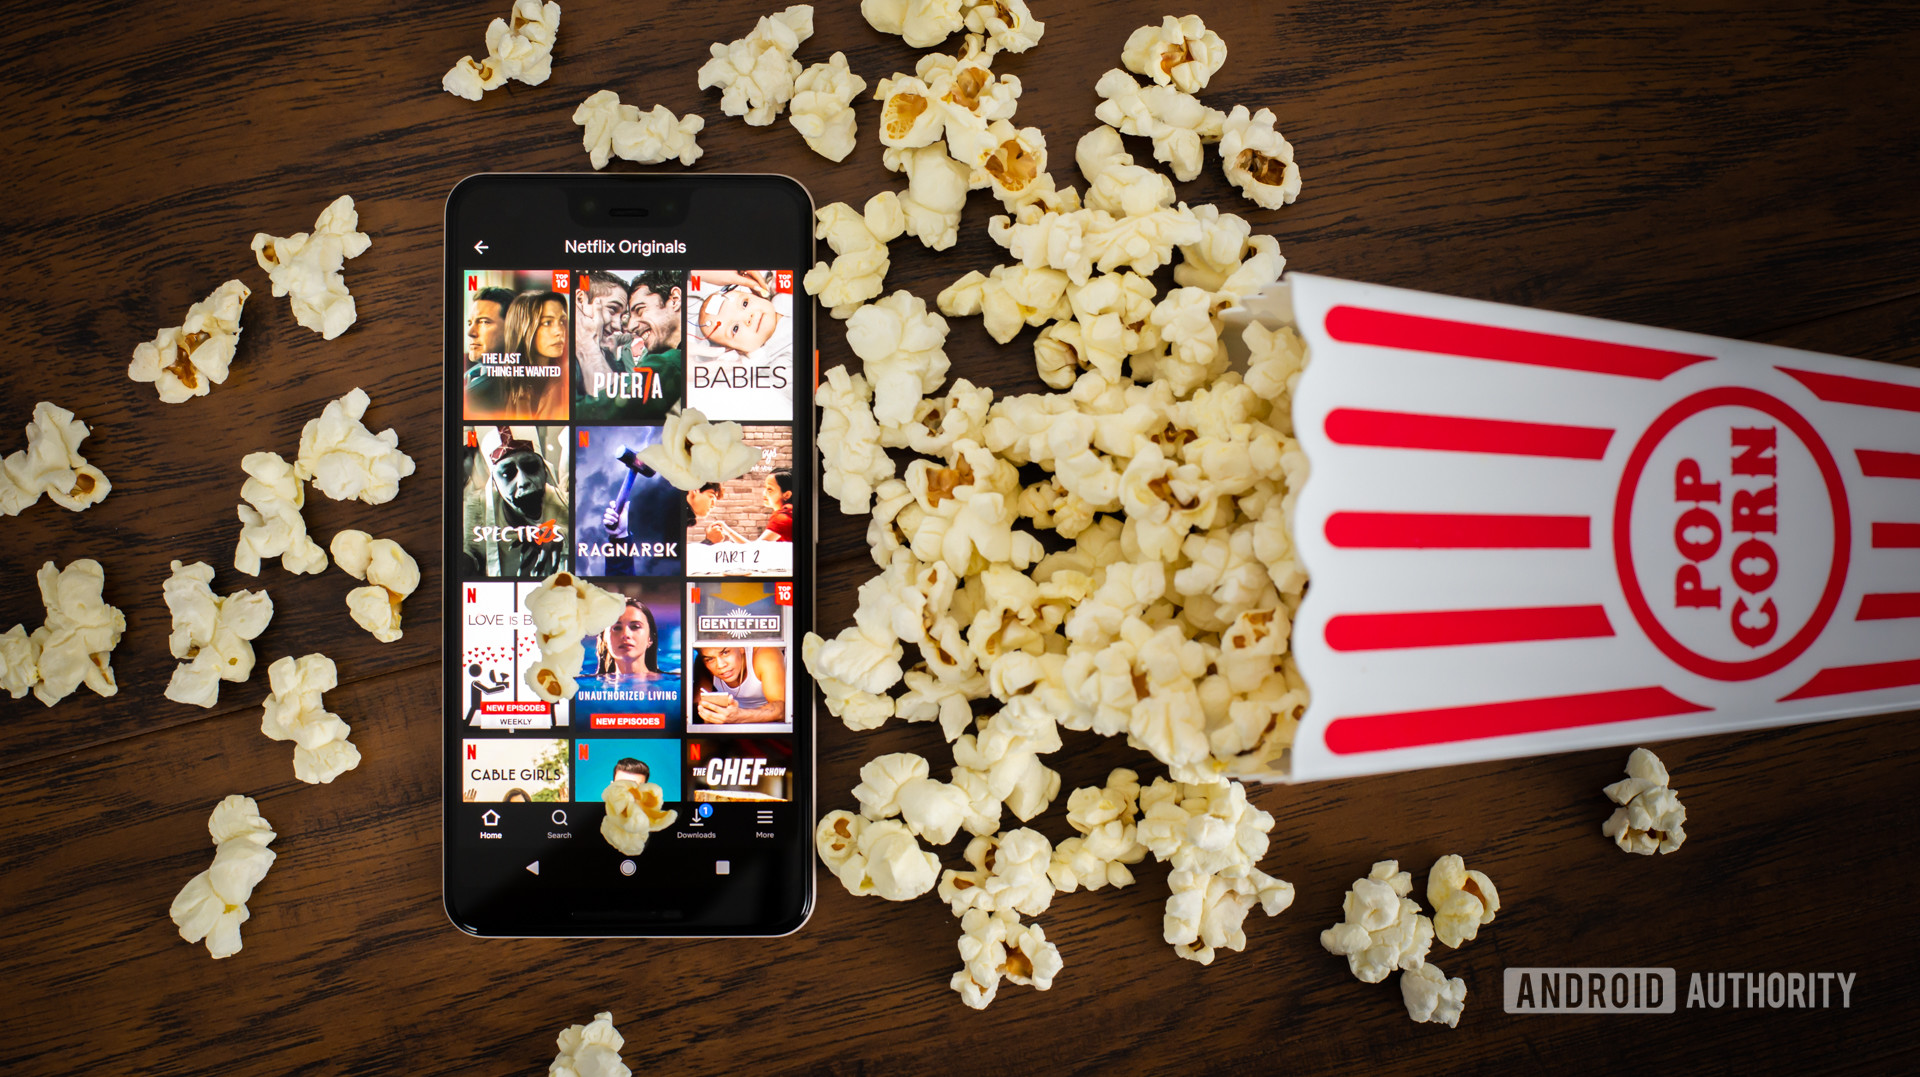 Netflix Originals next to popcorn stock photo 6 gangster movies on netflix